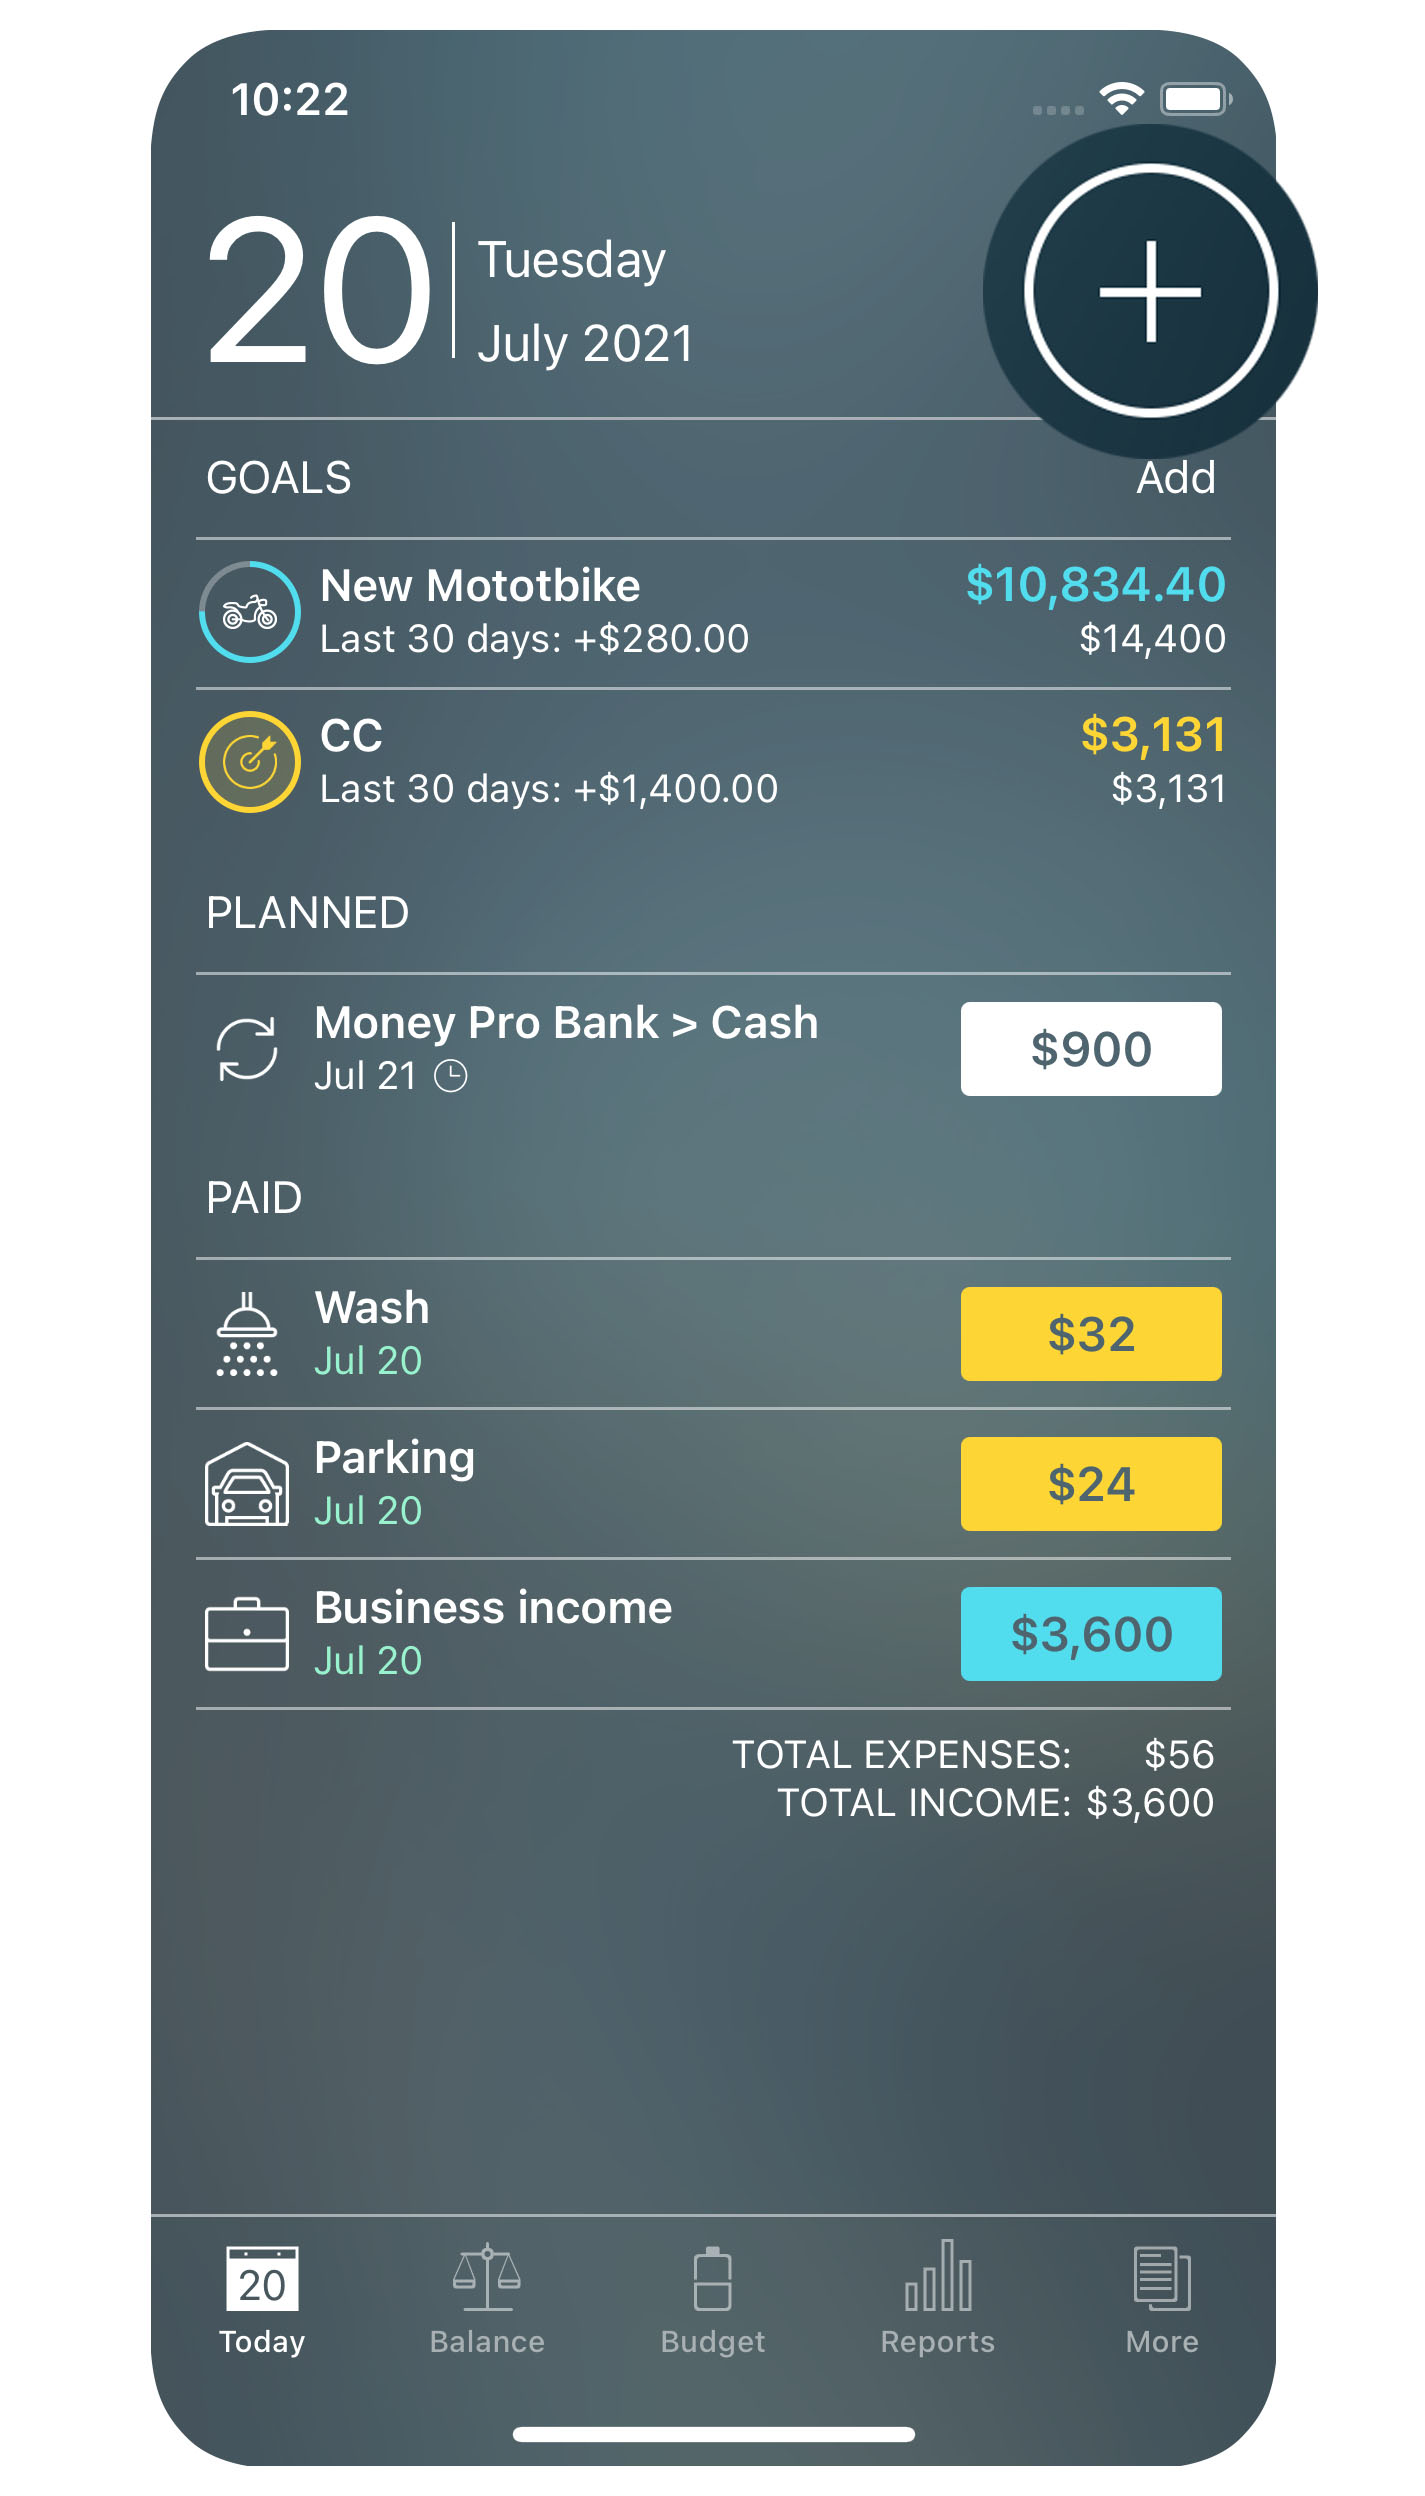 Money Pro - Creating a transaction - iPhone